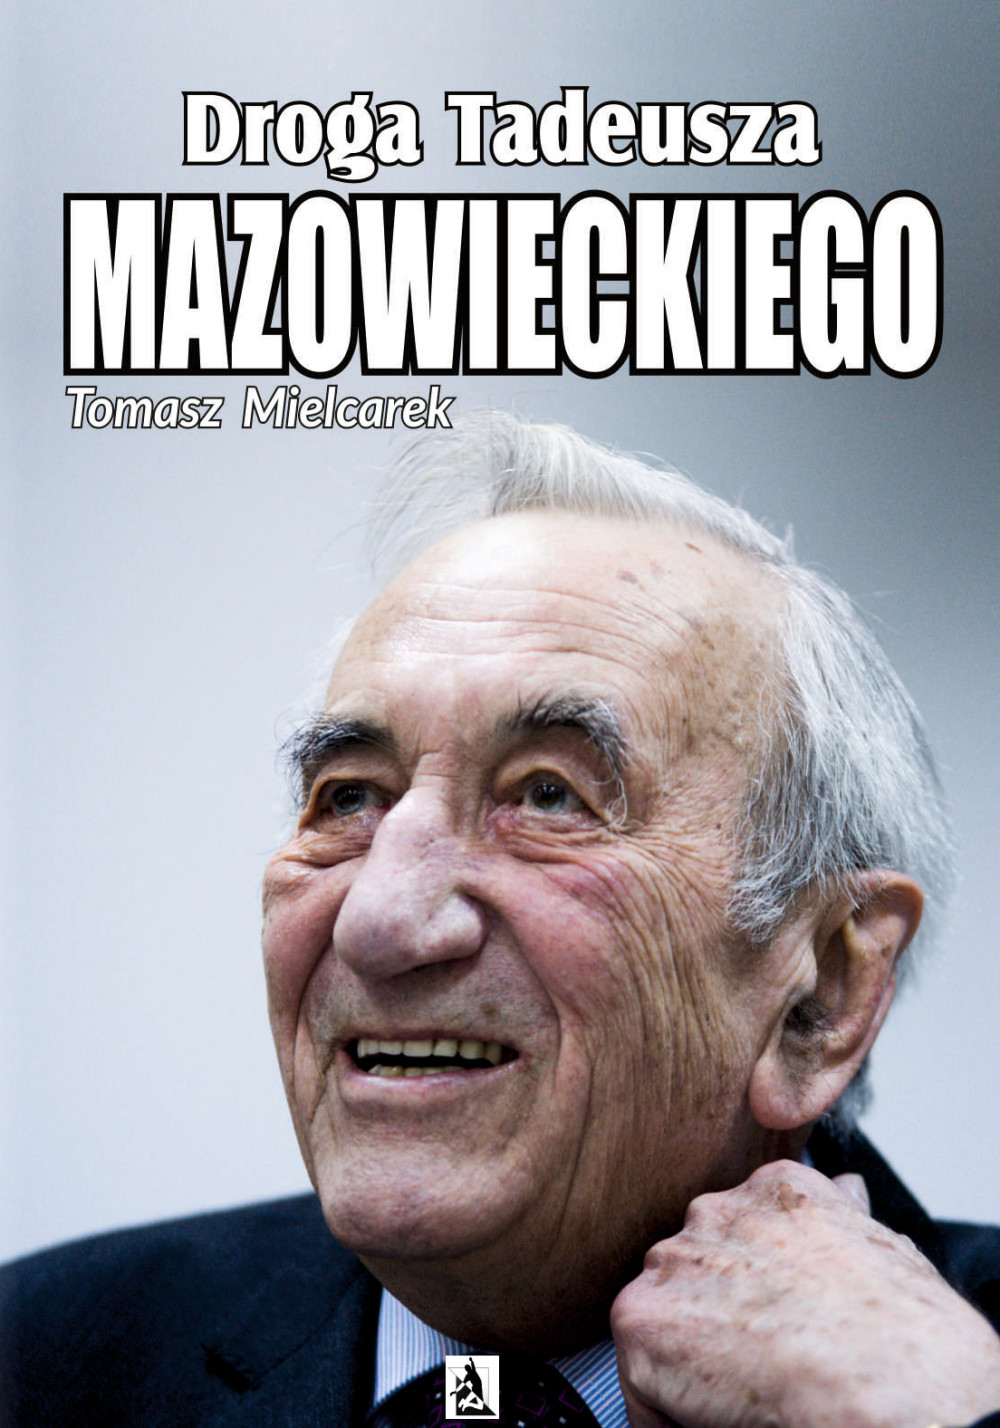 :: Droga Tadeusza Mazowieckiego - e-book ::